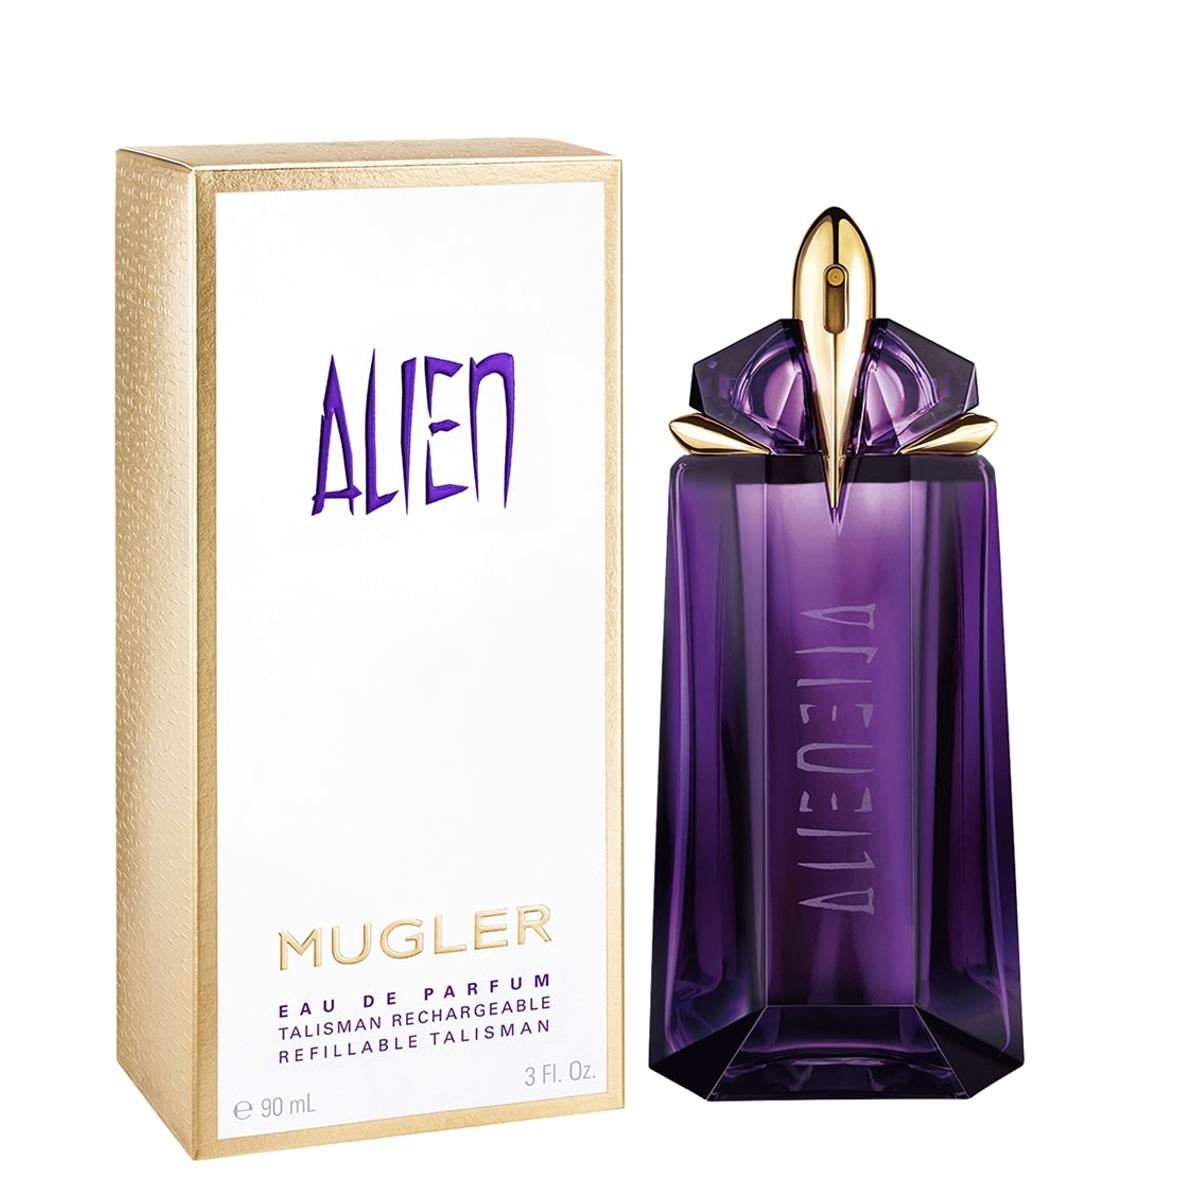 Selected image for MUGLER Alien Talismans Ženski parfem, Refillable, 90ml